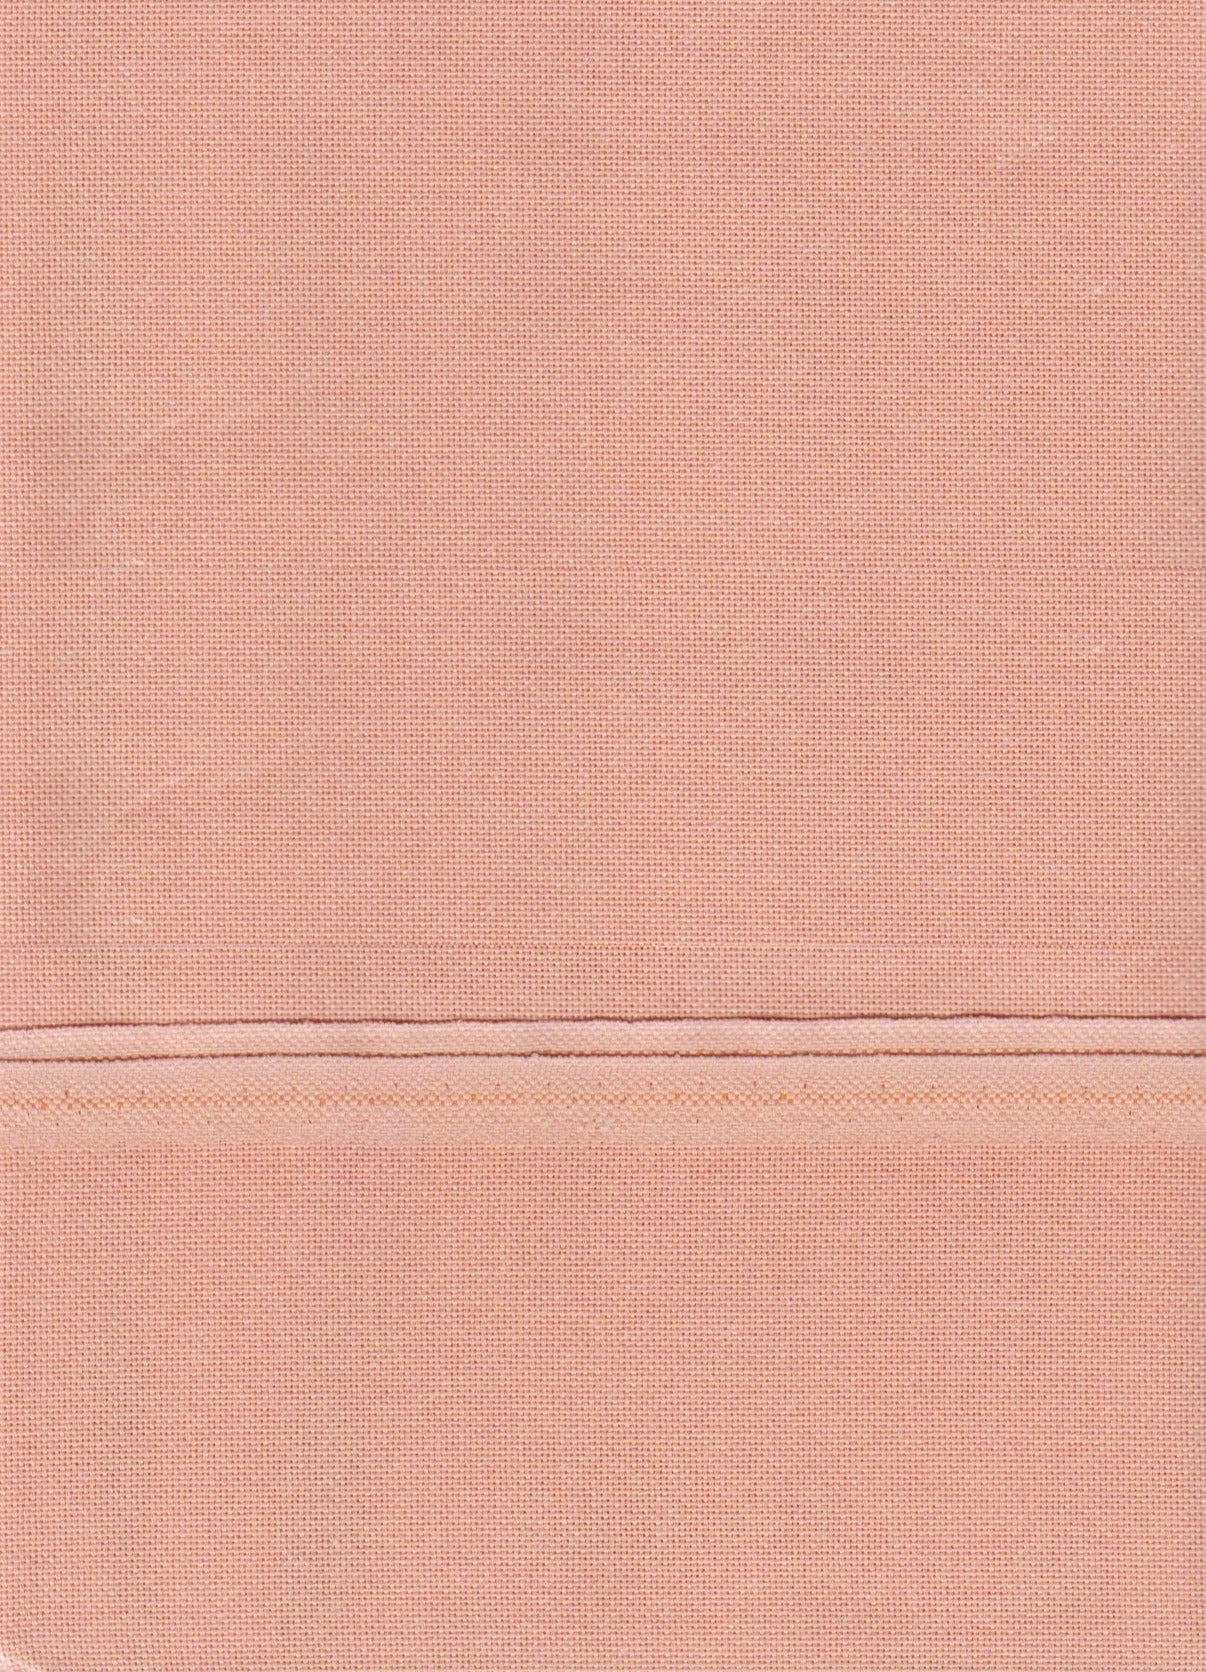 Zweigart Lugana 25ct 18x27 Peach cross stitch Fabric